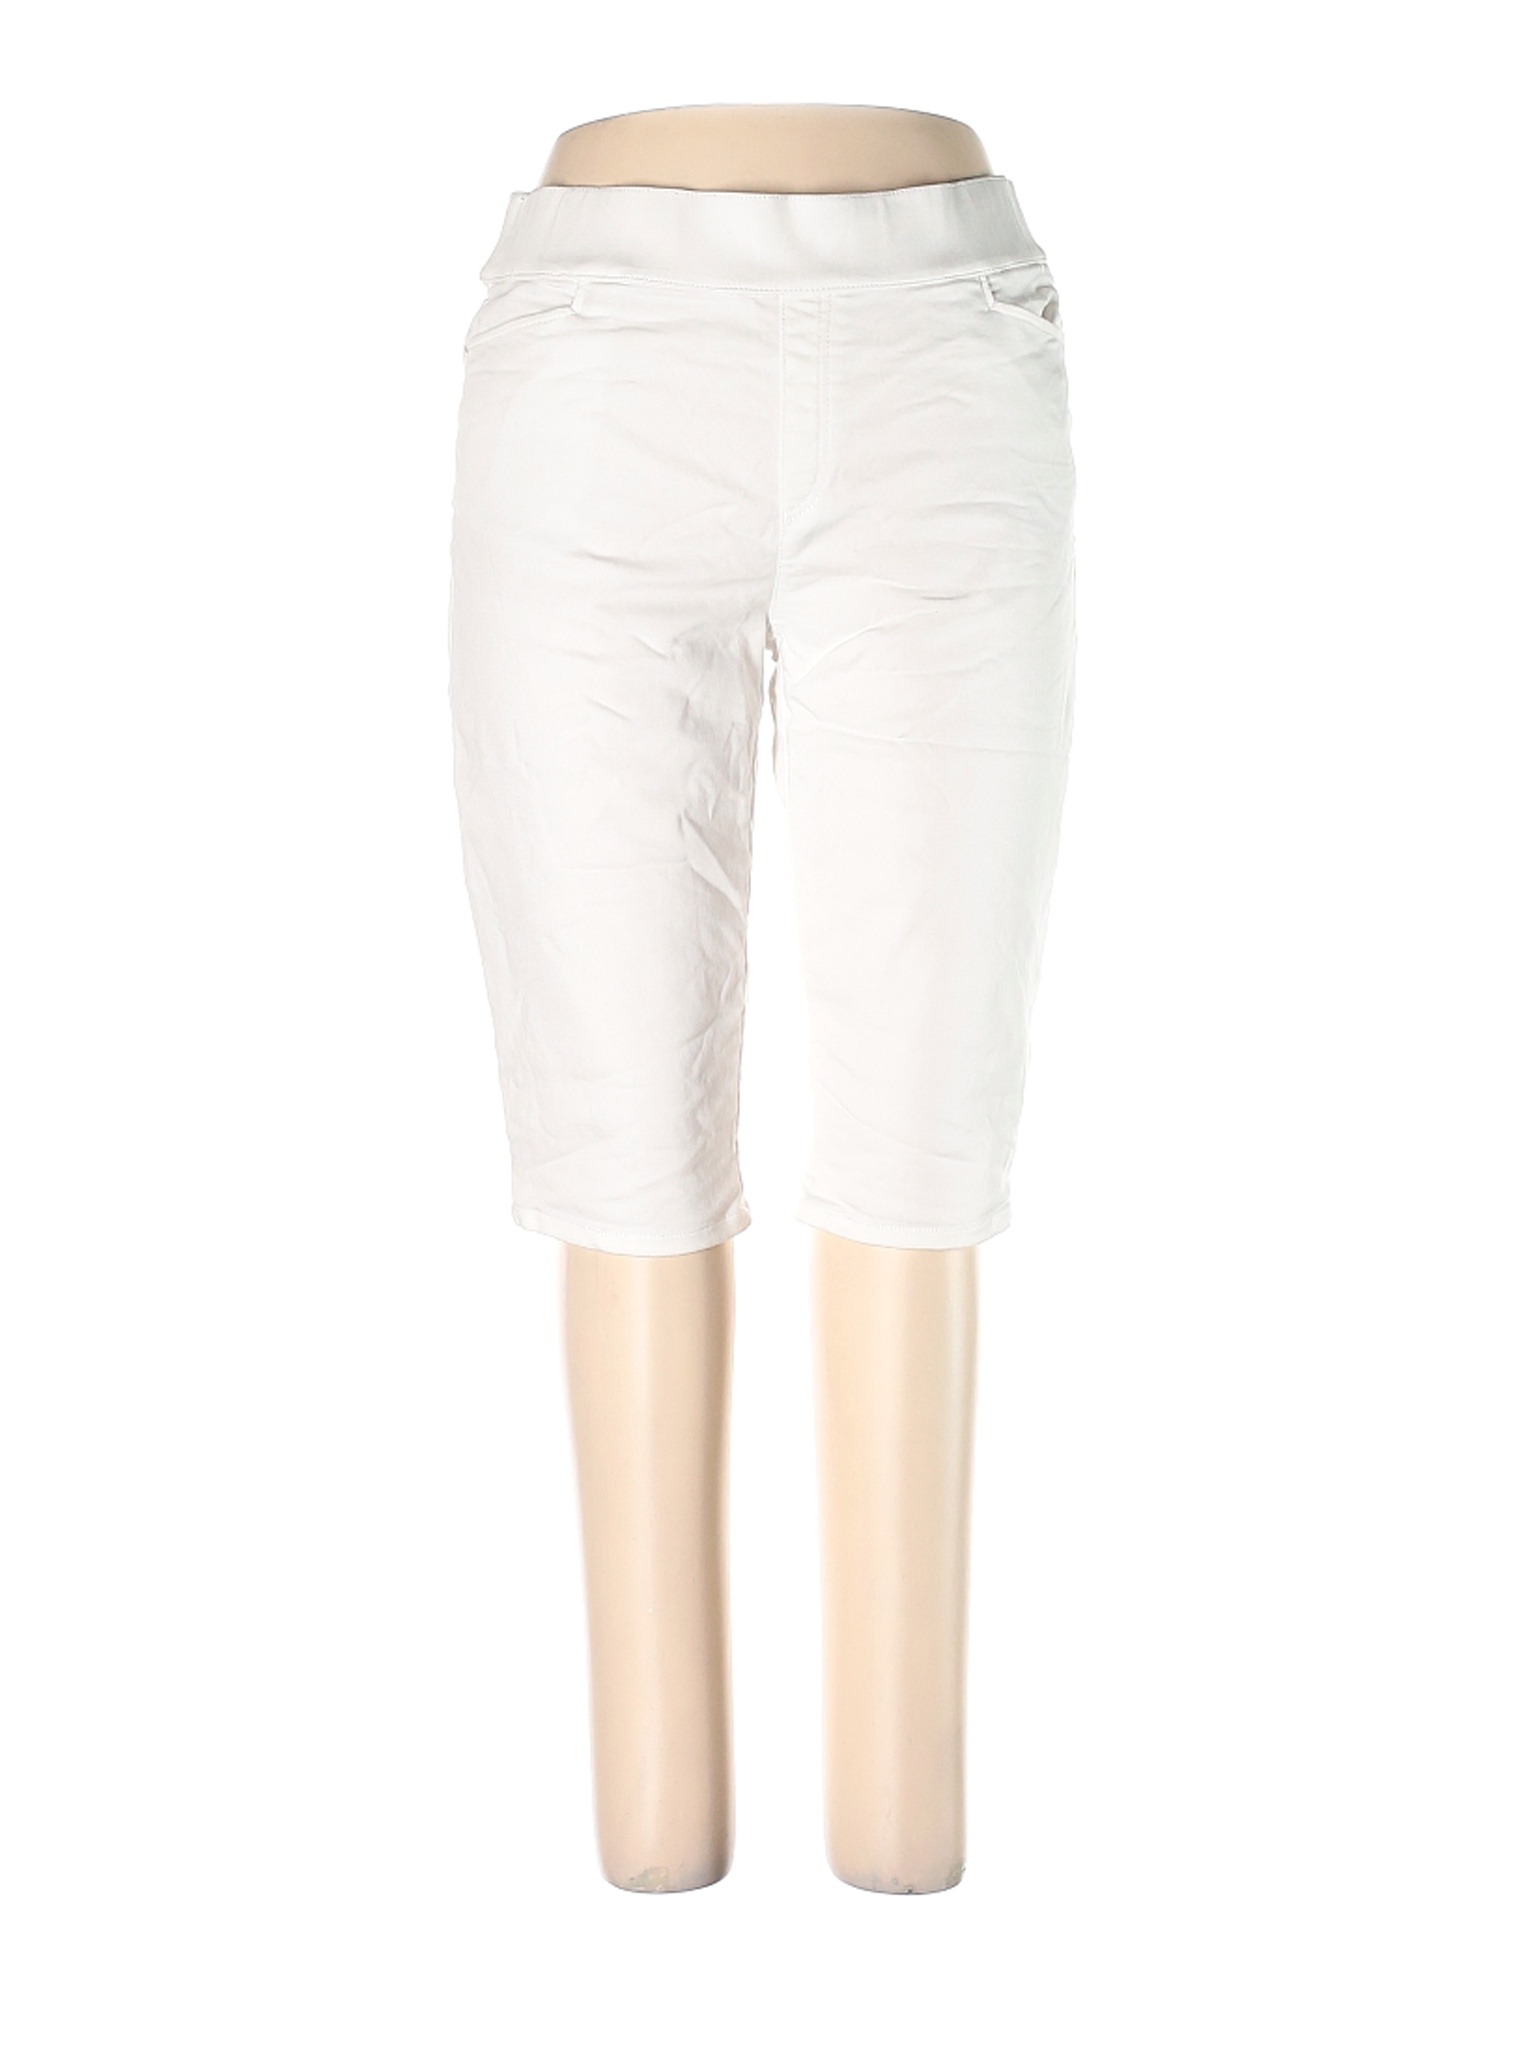 Intro Love Women White Casual Pants XL | eBay